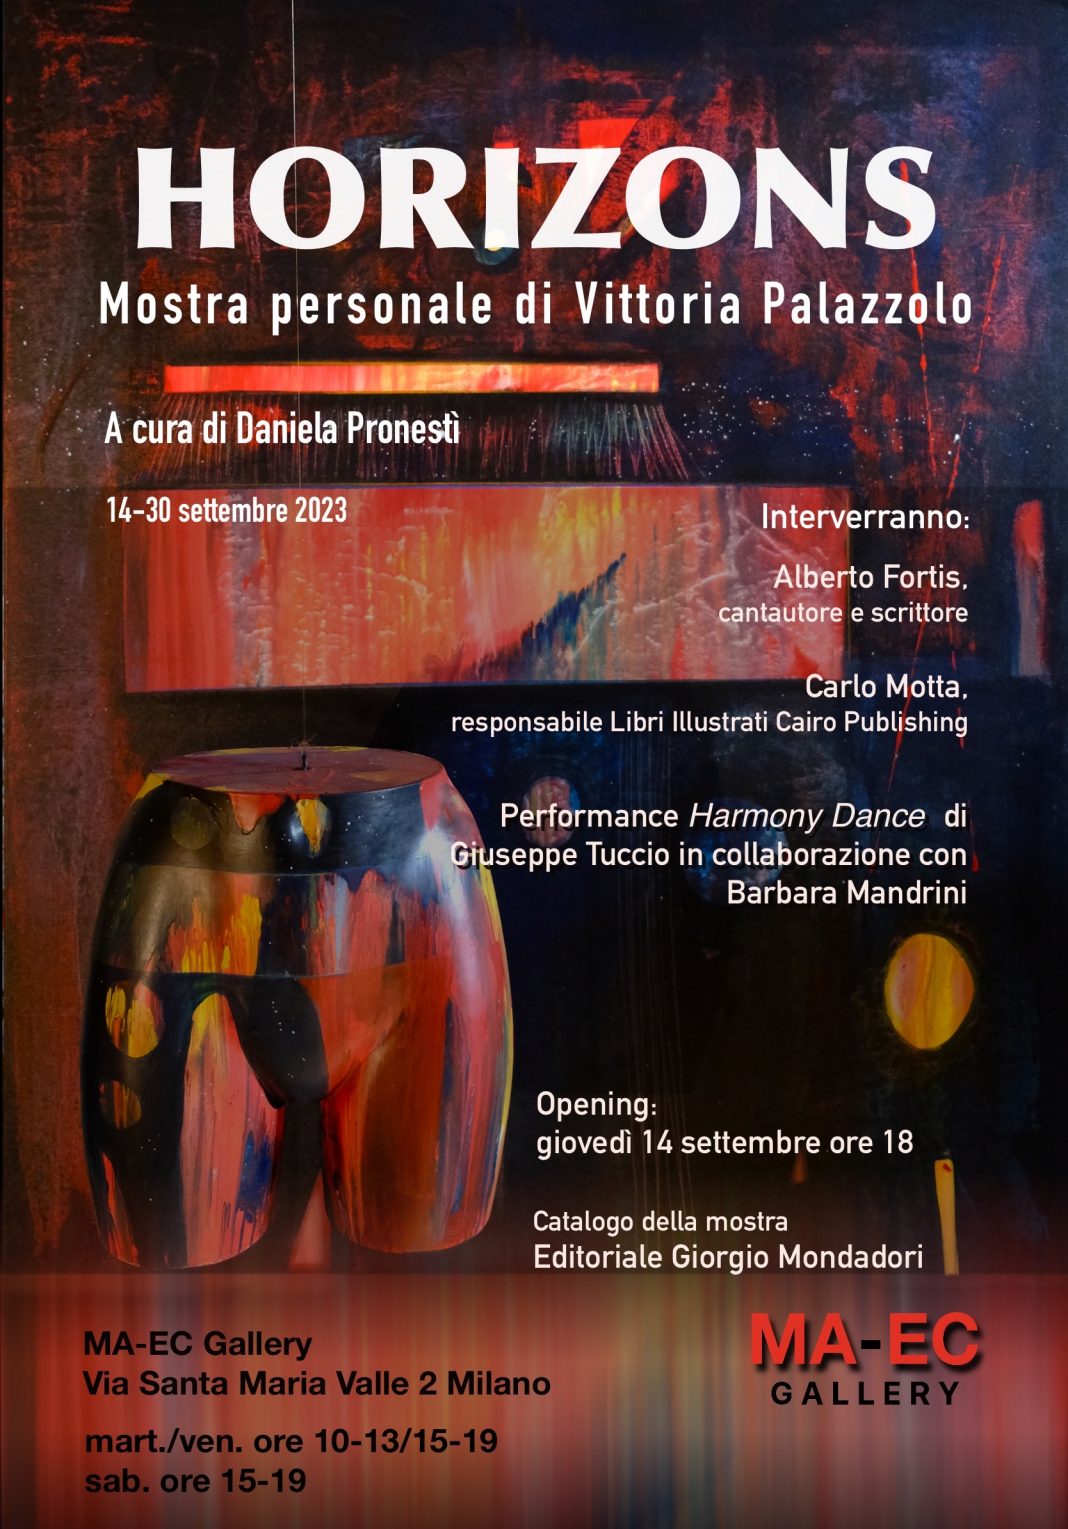 Vittoria Palazzolo – Horizonshttps://www.exibart.com/repository/media/formidable/11/img/c73/INVITO-Mostra-Vittoria-Palazzolo-1068x1529.jpg